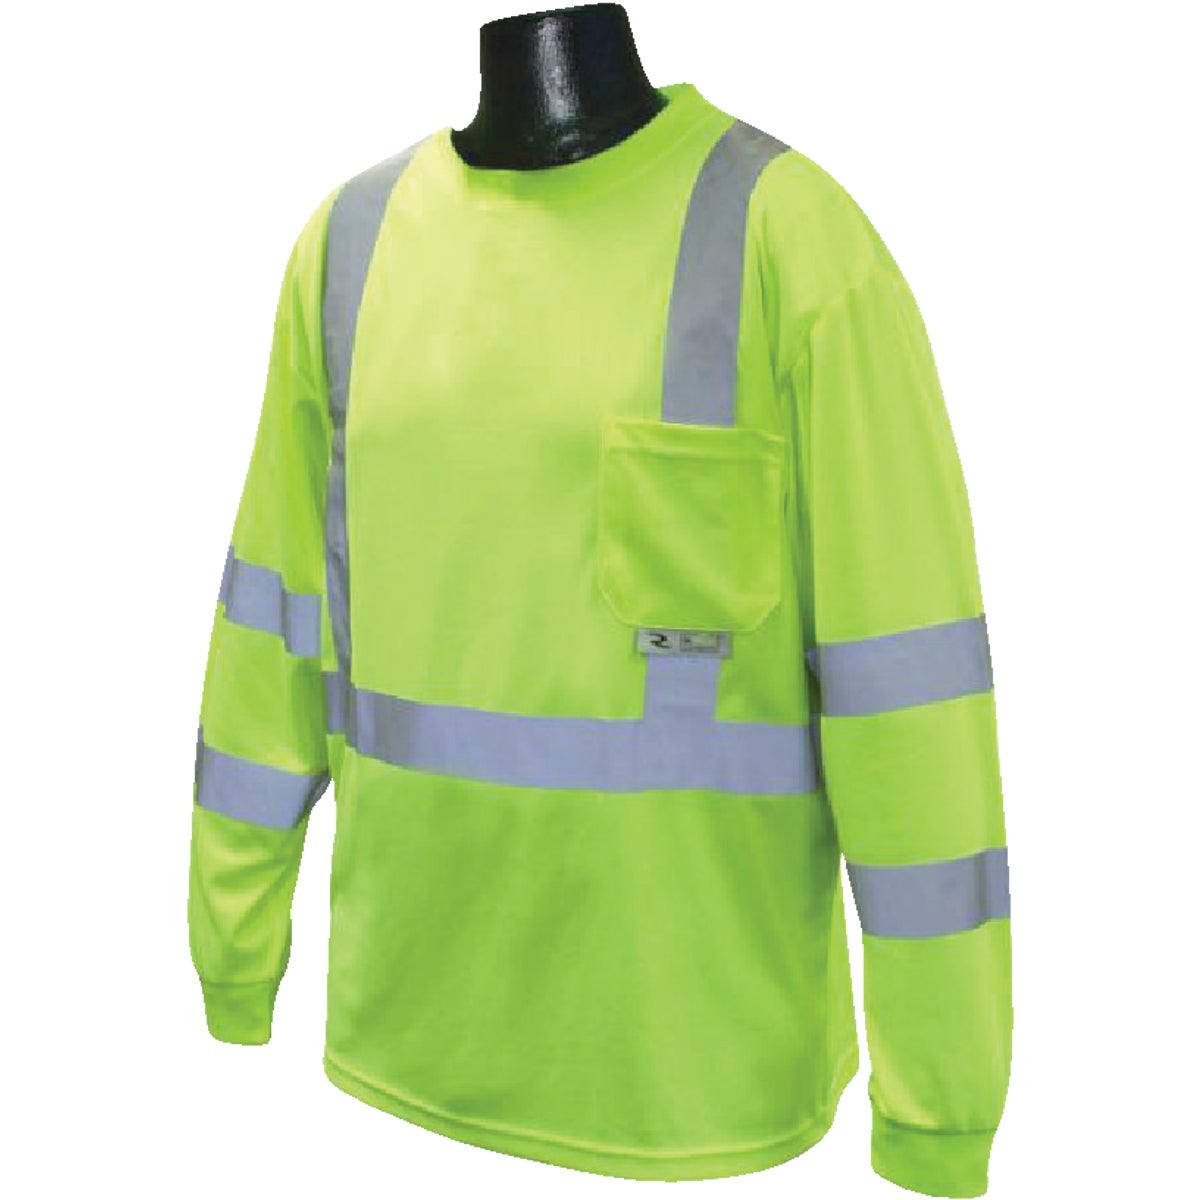 Radians Rad Wear ANSI Class 3 Hi Vis Green Safety T-Shirt Large